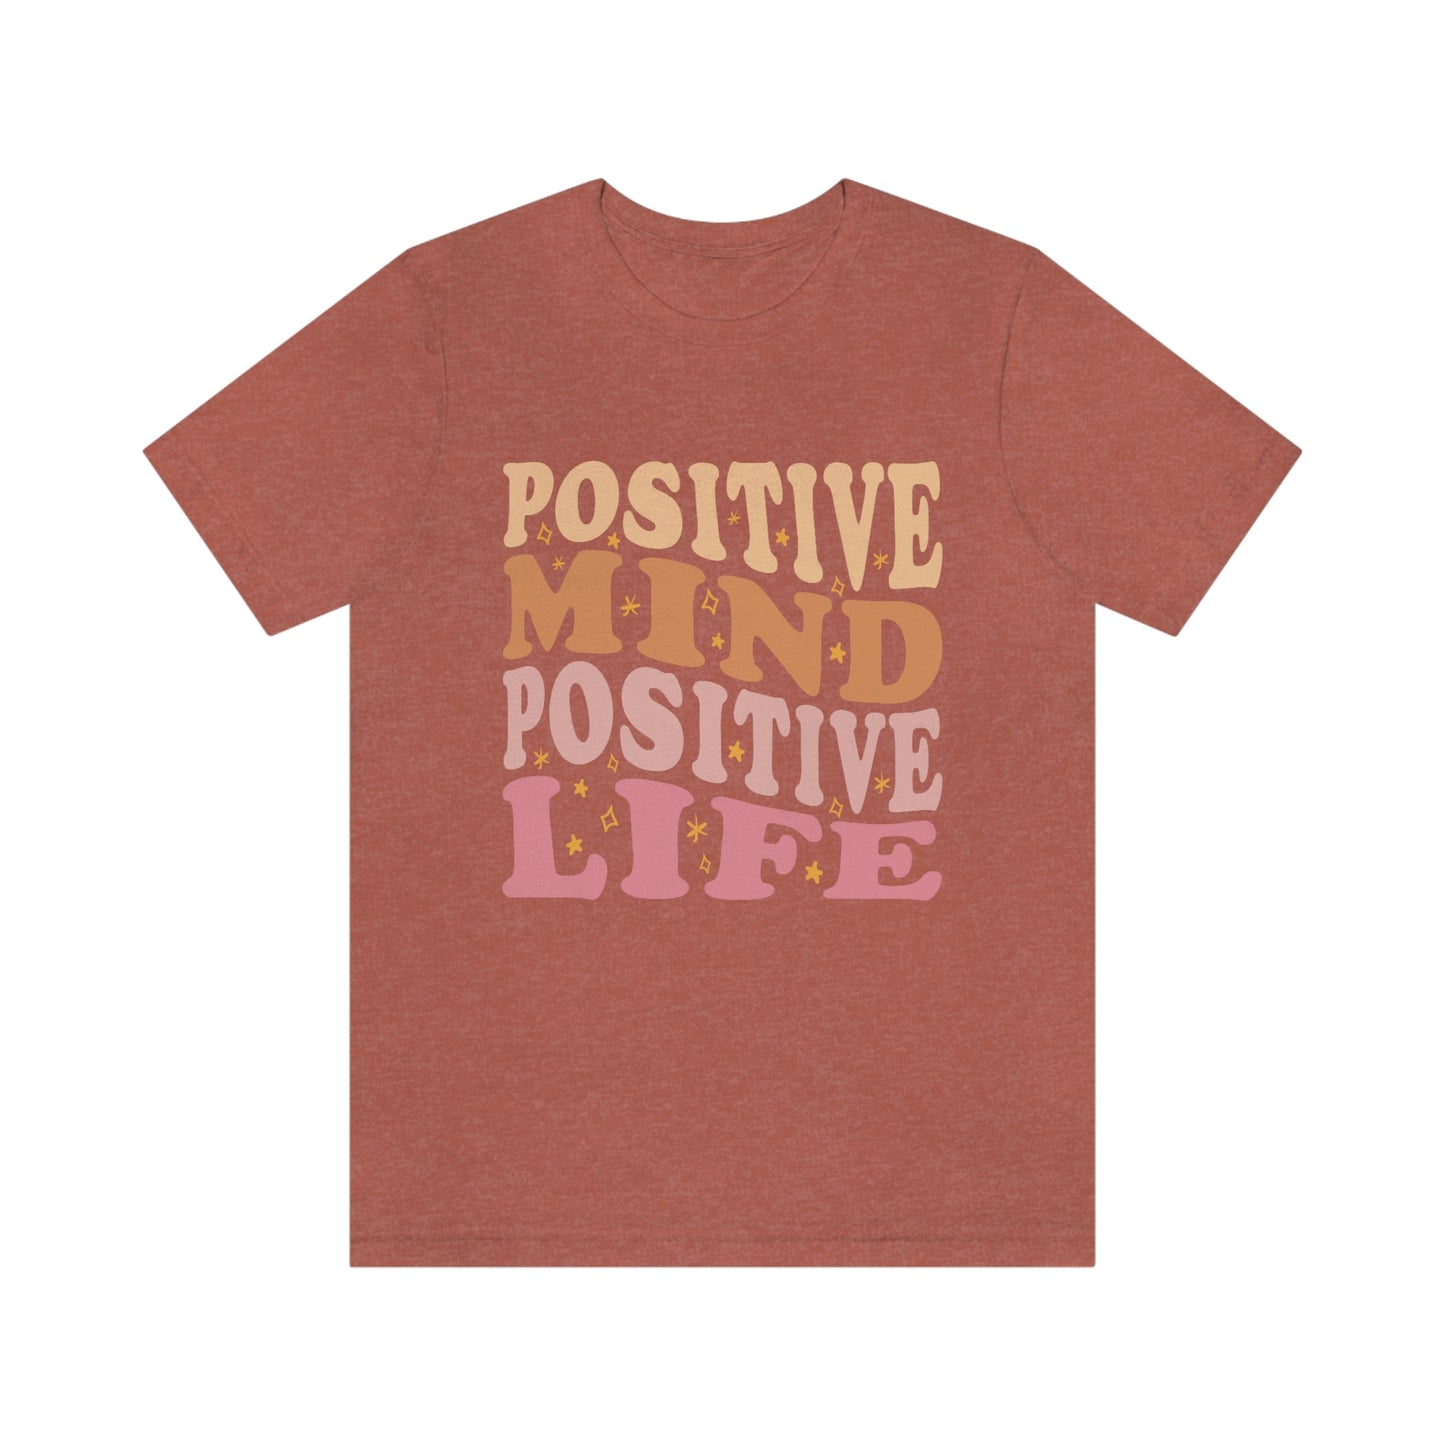 Positive Mind Positive Life T-Shirt